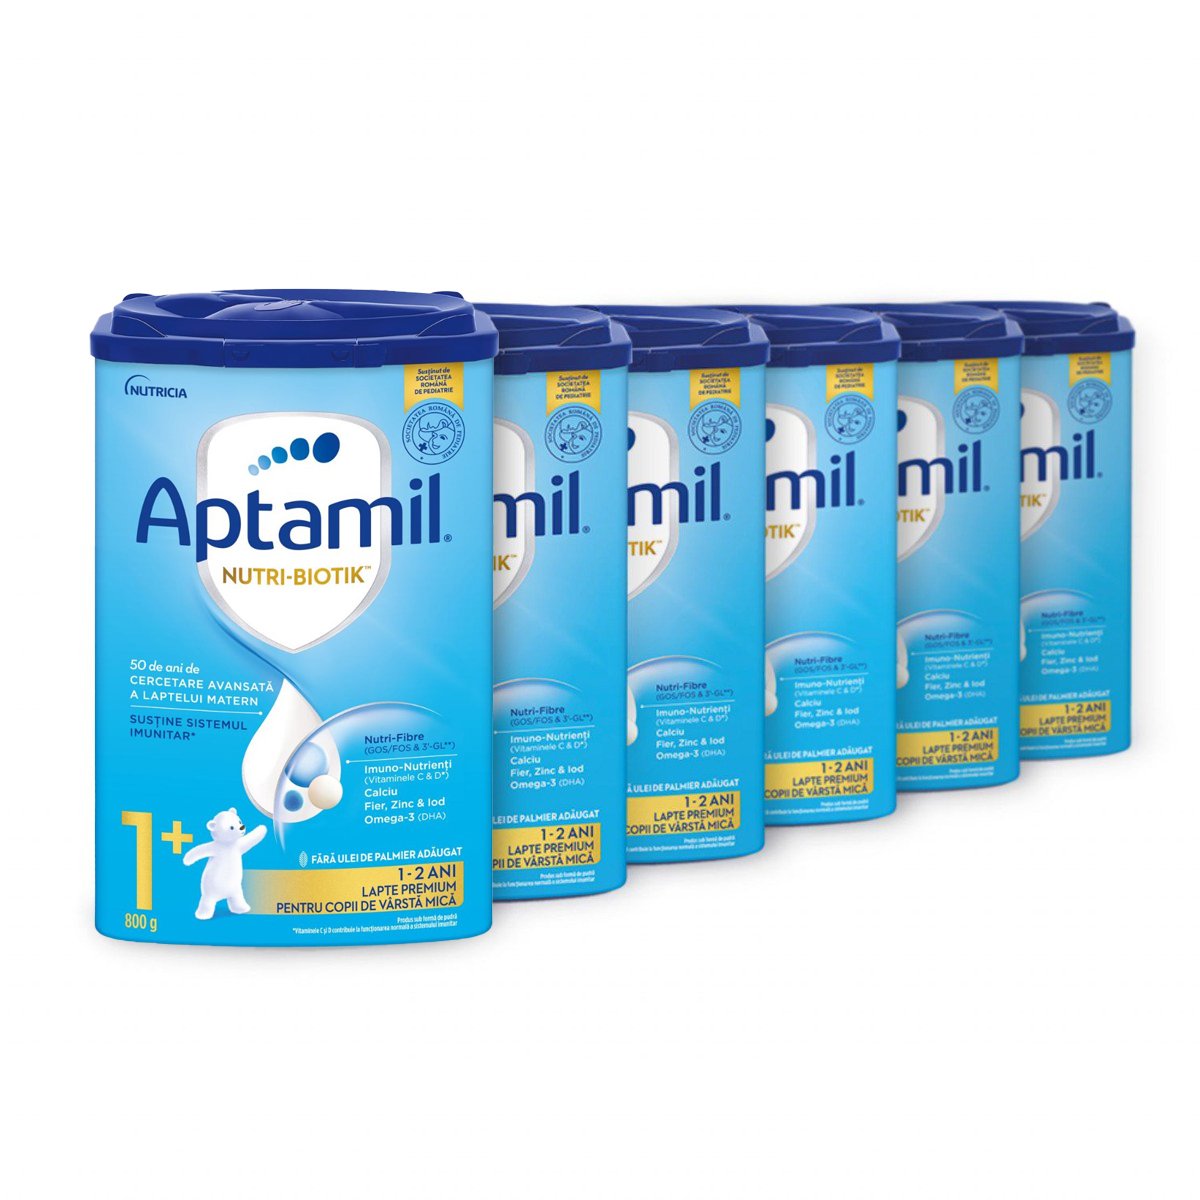 Lapte praf Aptamil Nutri-Biotik 1+, 6 pachete x 800 g, 12-24 luni Lapte praf 2023-09-26